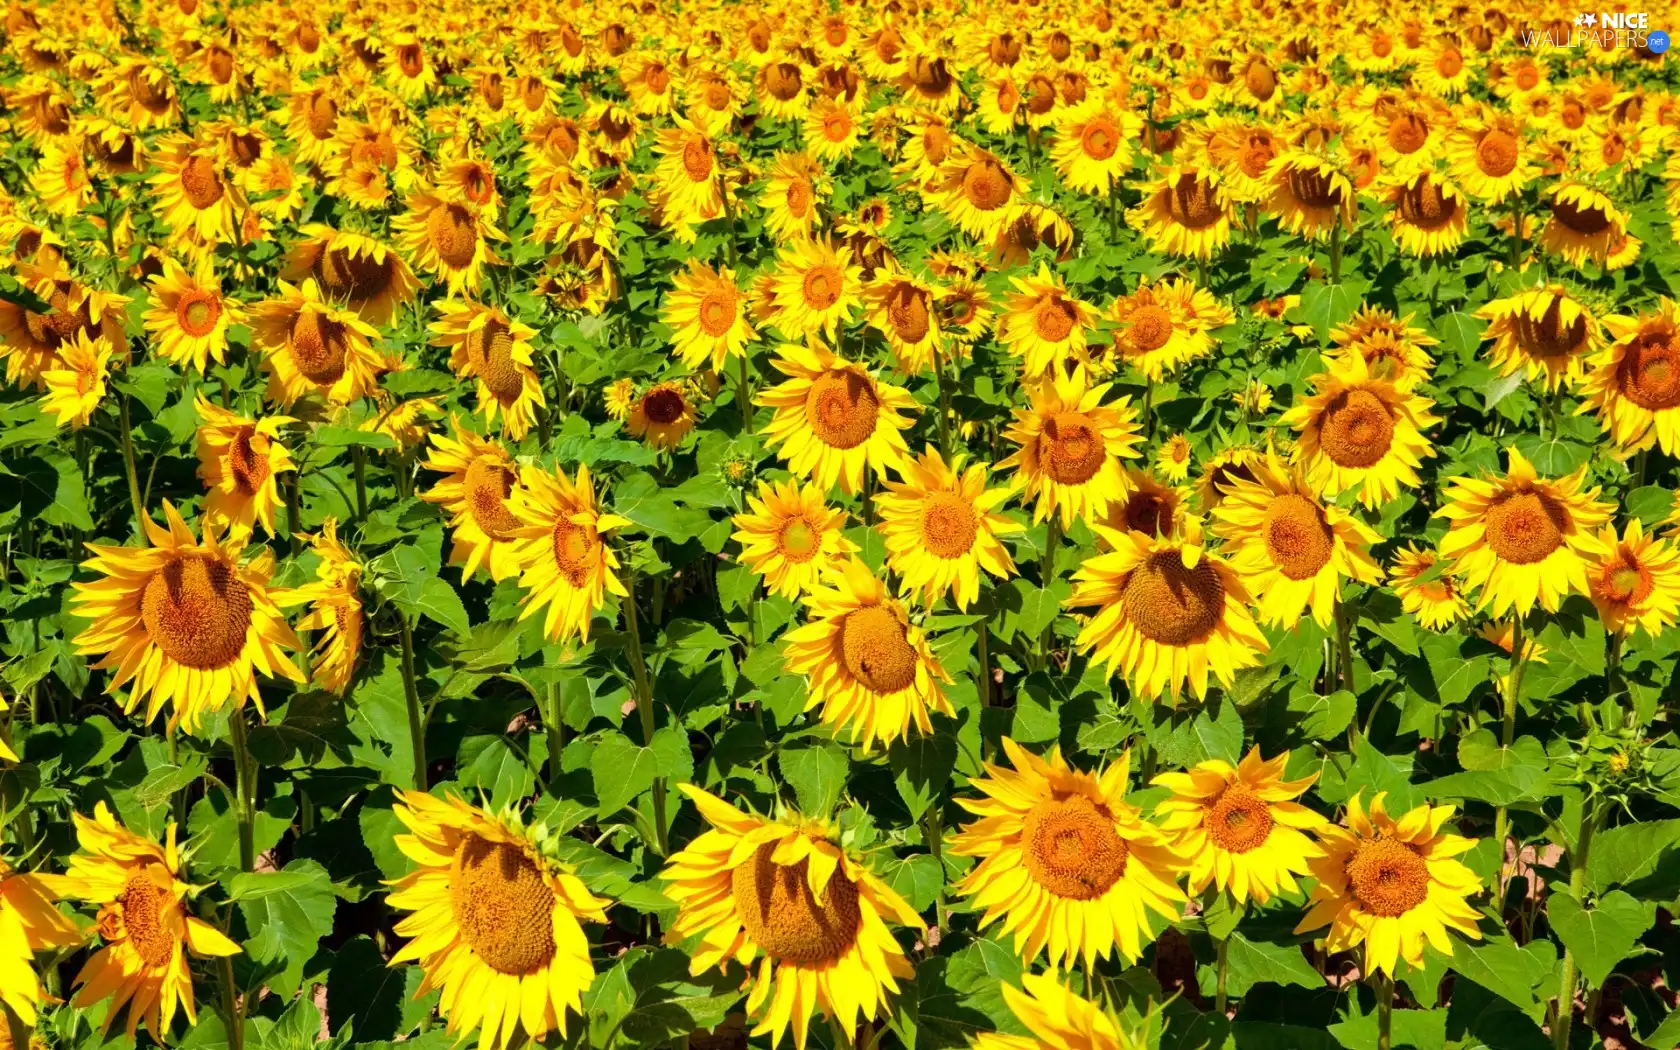 Nice sunflowers